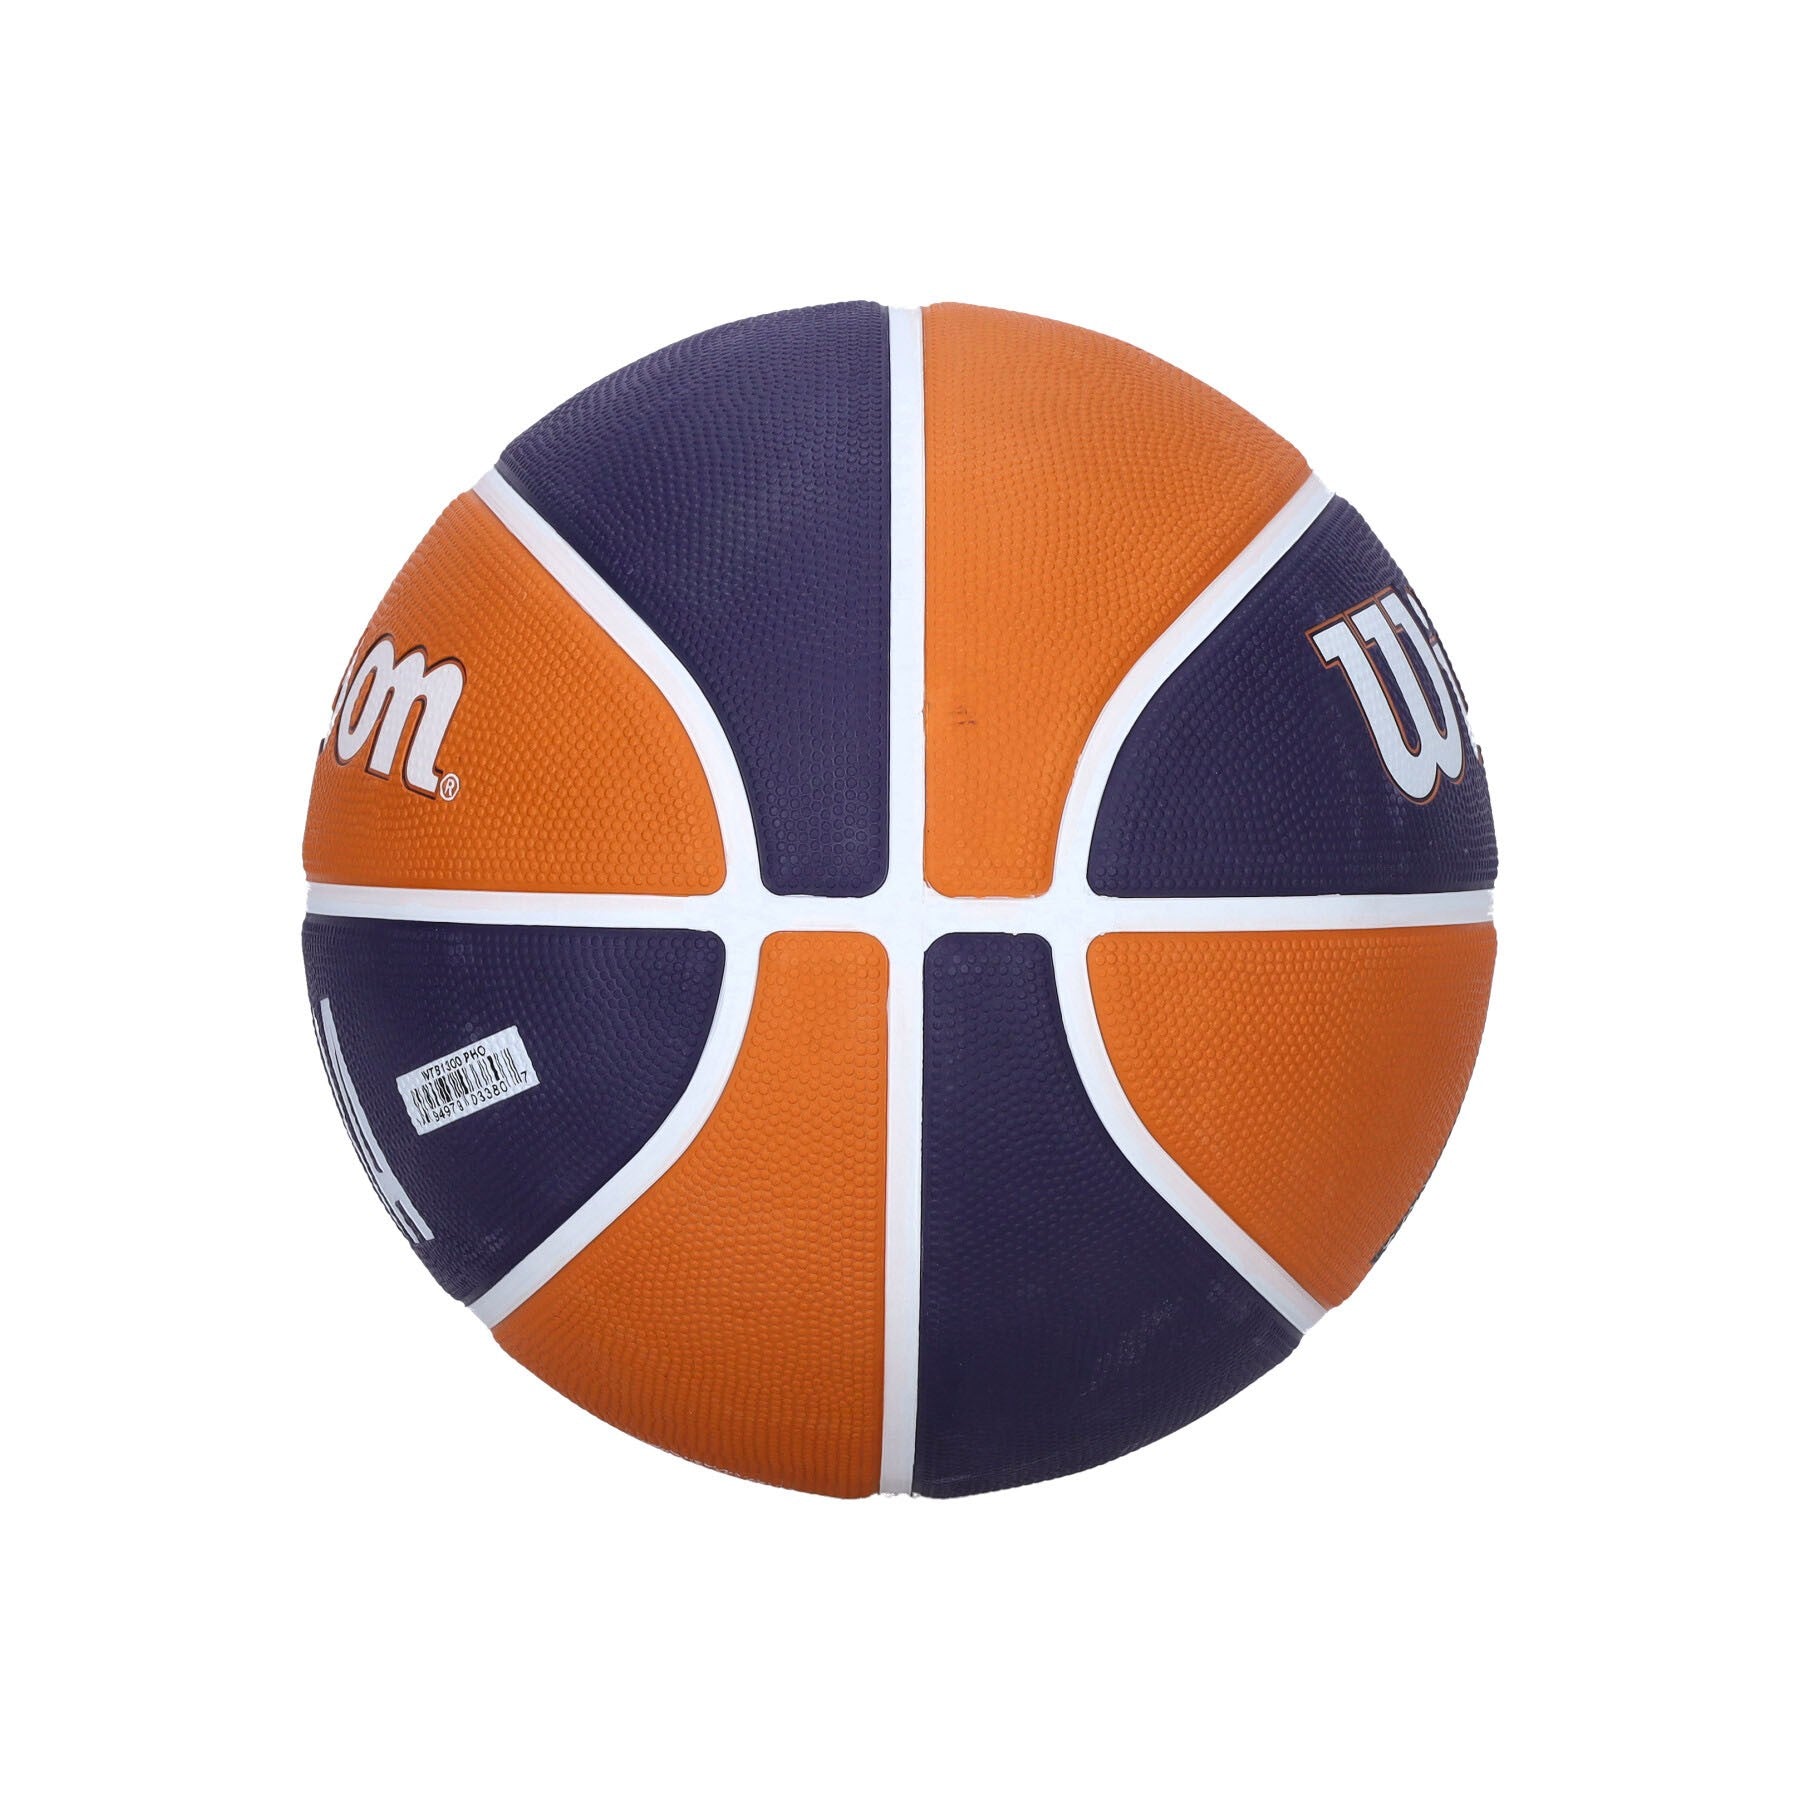 Wilson Team, Pallone Uomo Nba Team Tribute Basketball Size 7 Phosun, 